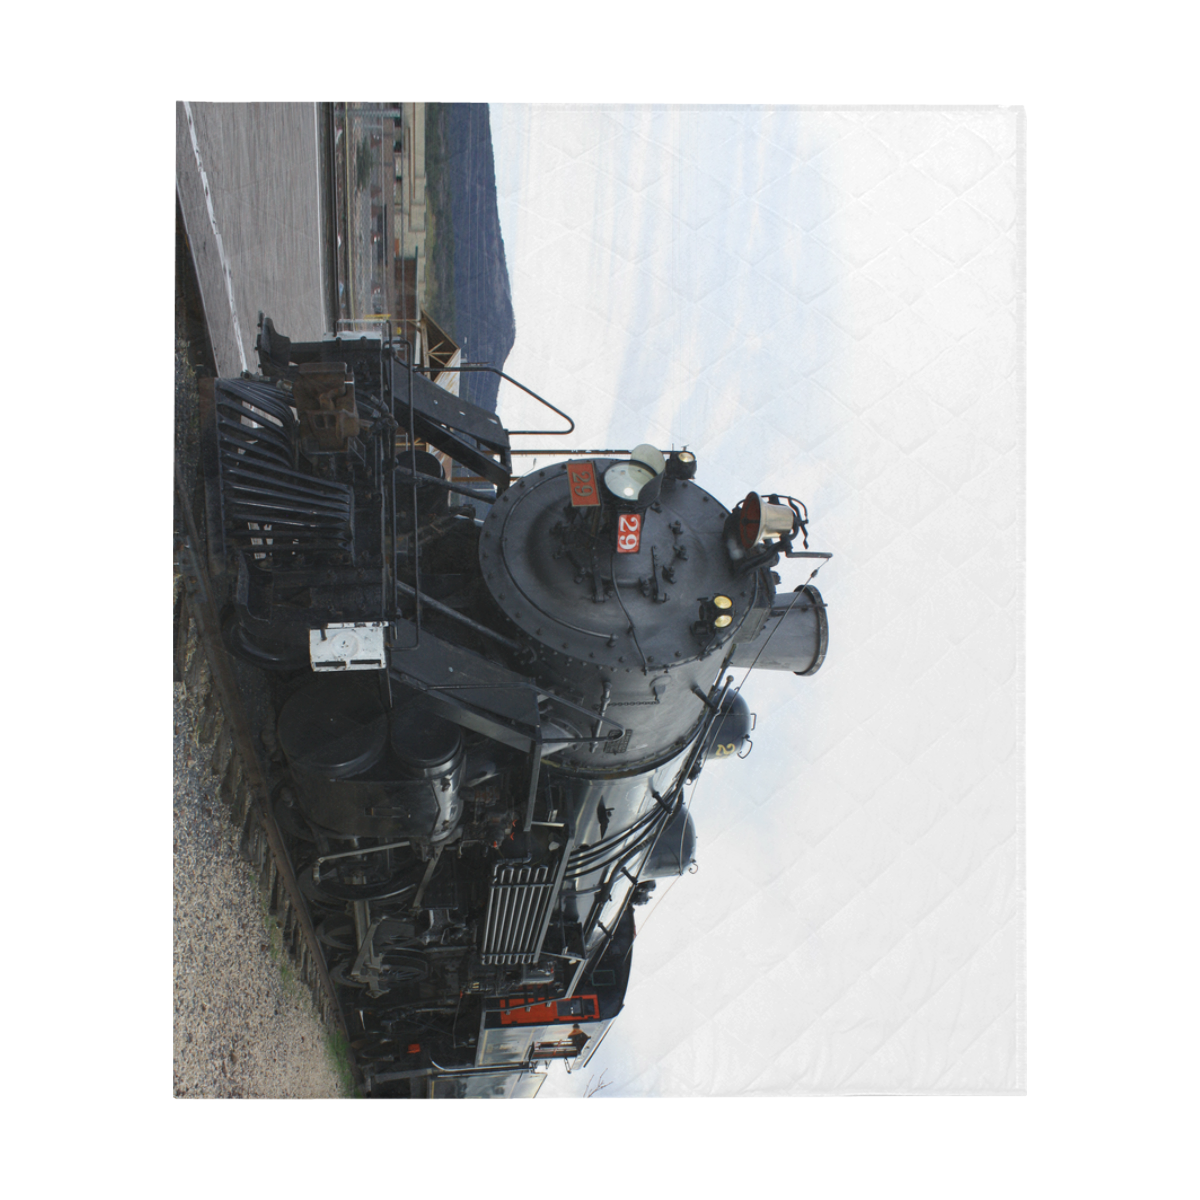 Railroad Vintage Steam Engine on Train Tracks Quilt 60"x70"